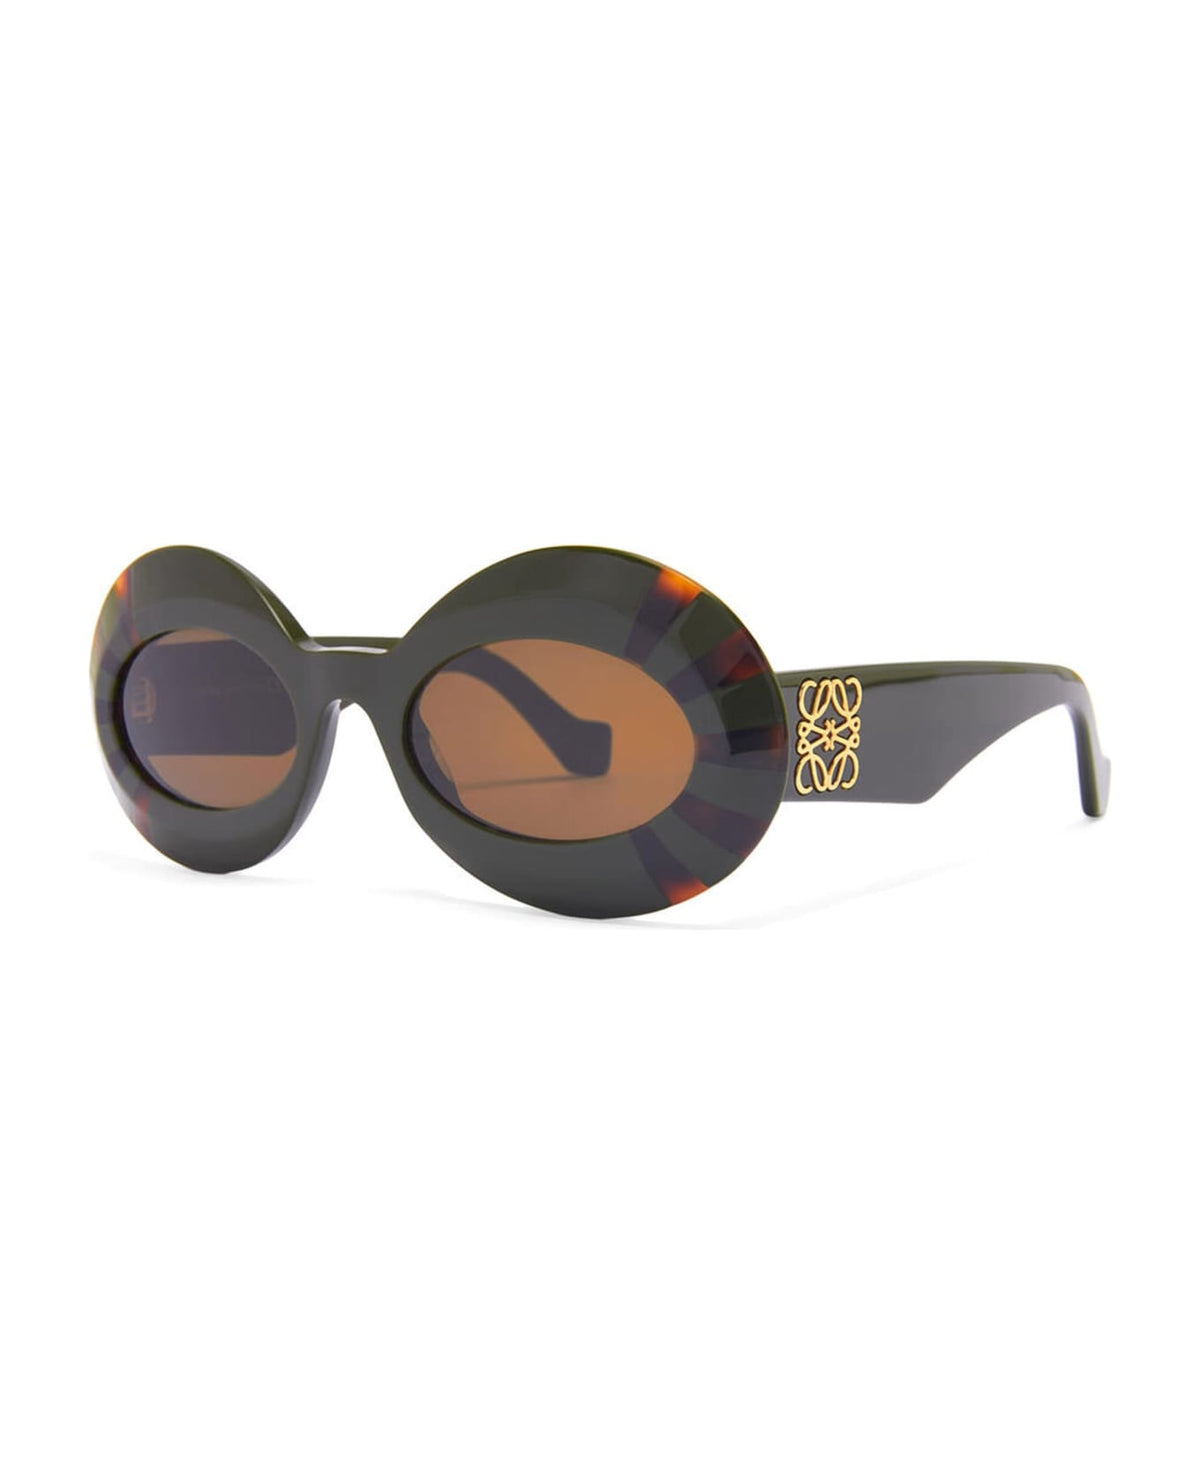 Lw40091i - Green / Brown Sunglasses